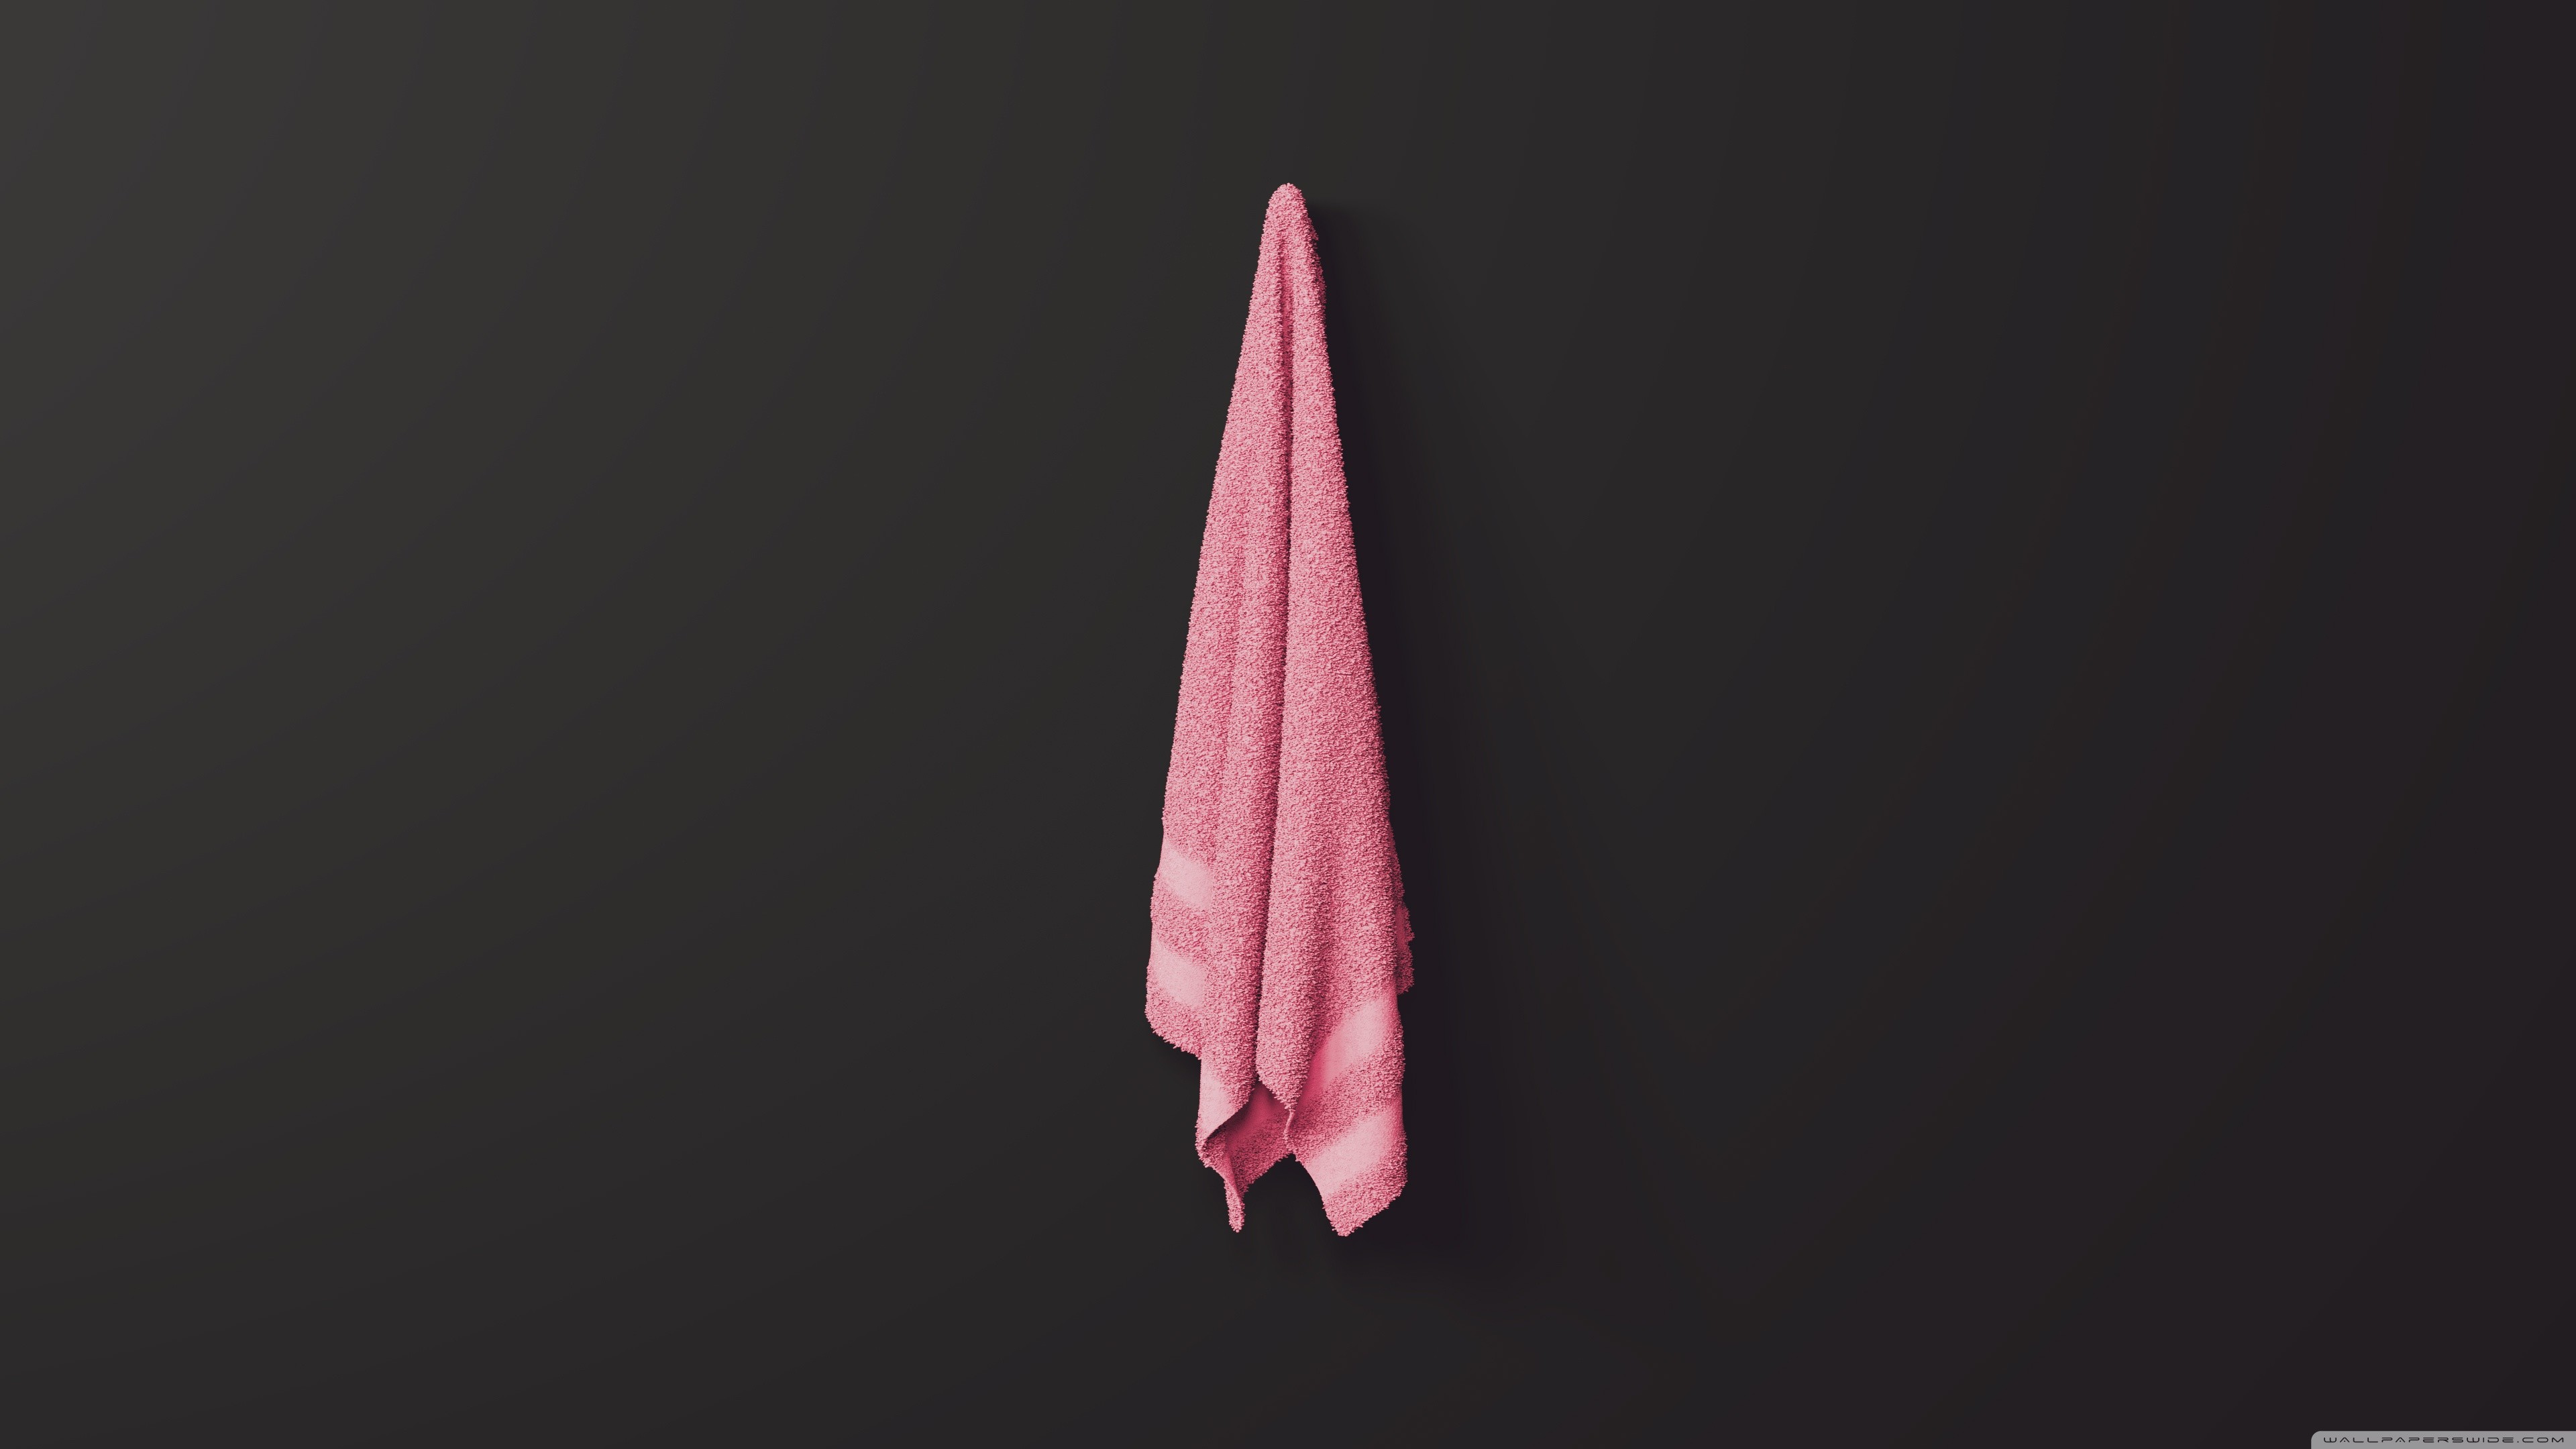 Minimal Towel Red 4K HD Wide Wallpaper for Widescreen